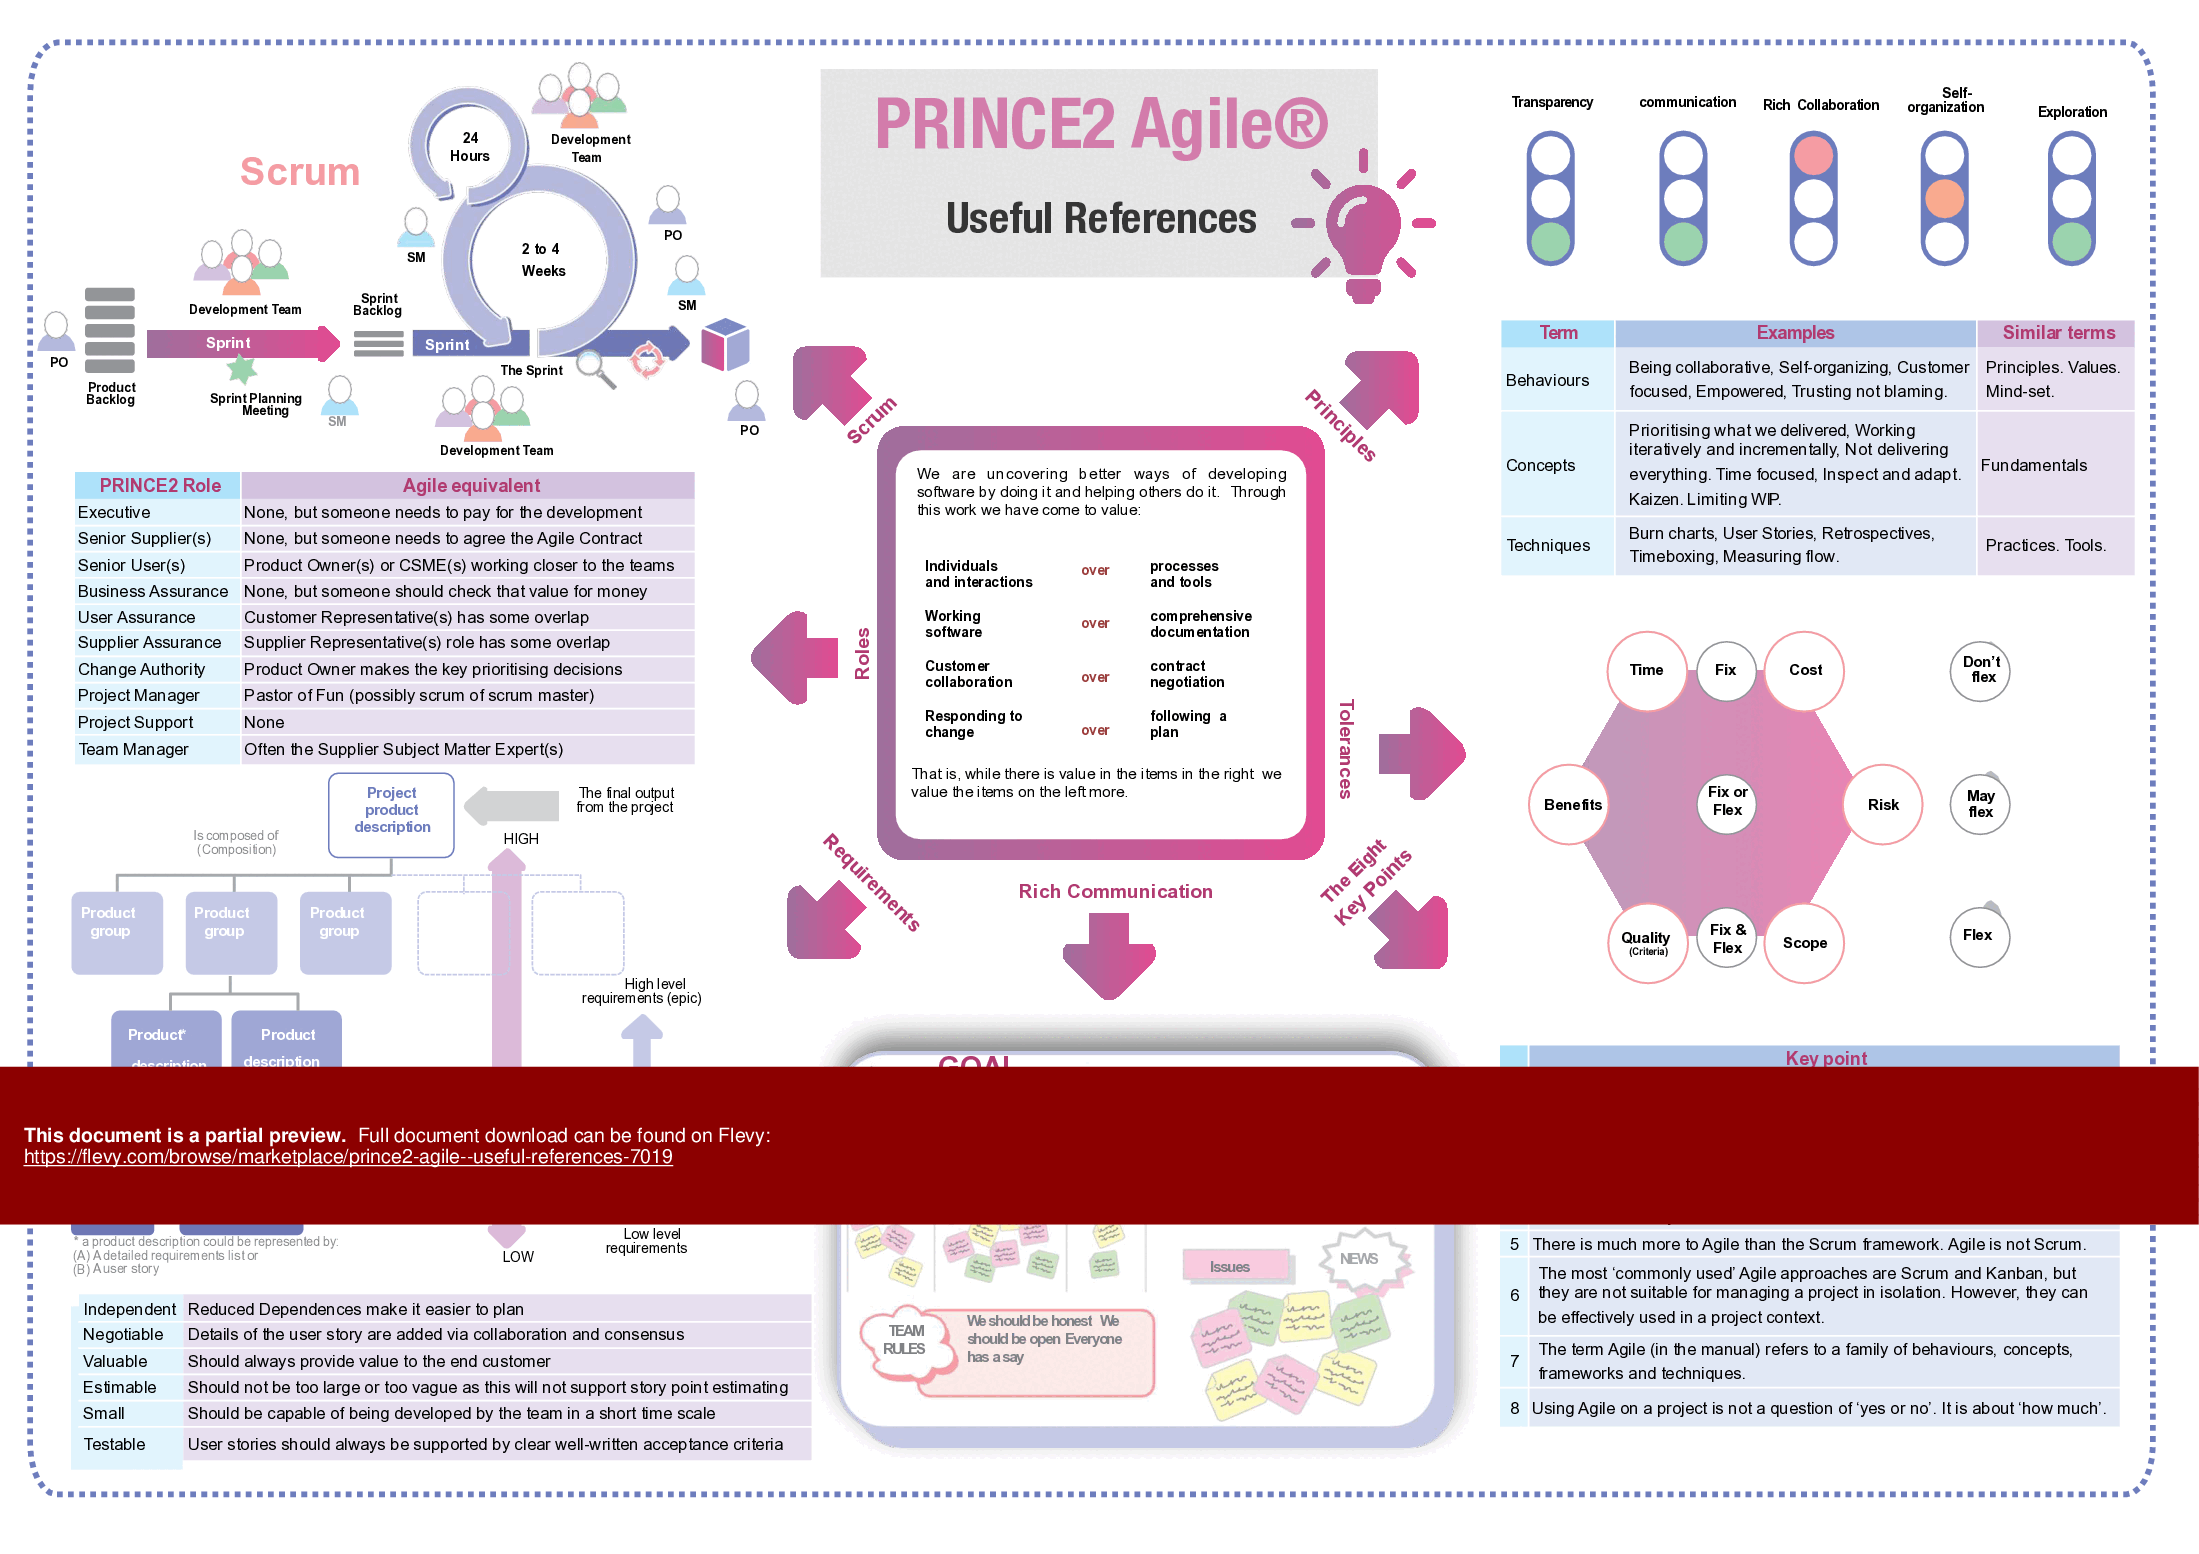 PRINCE2 Agile - Useful References